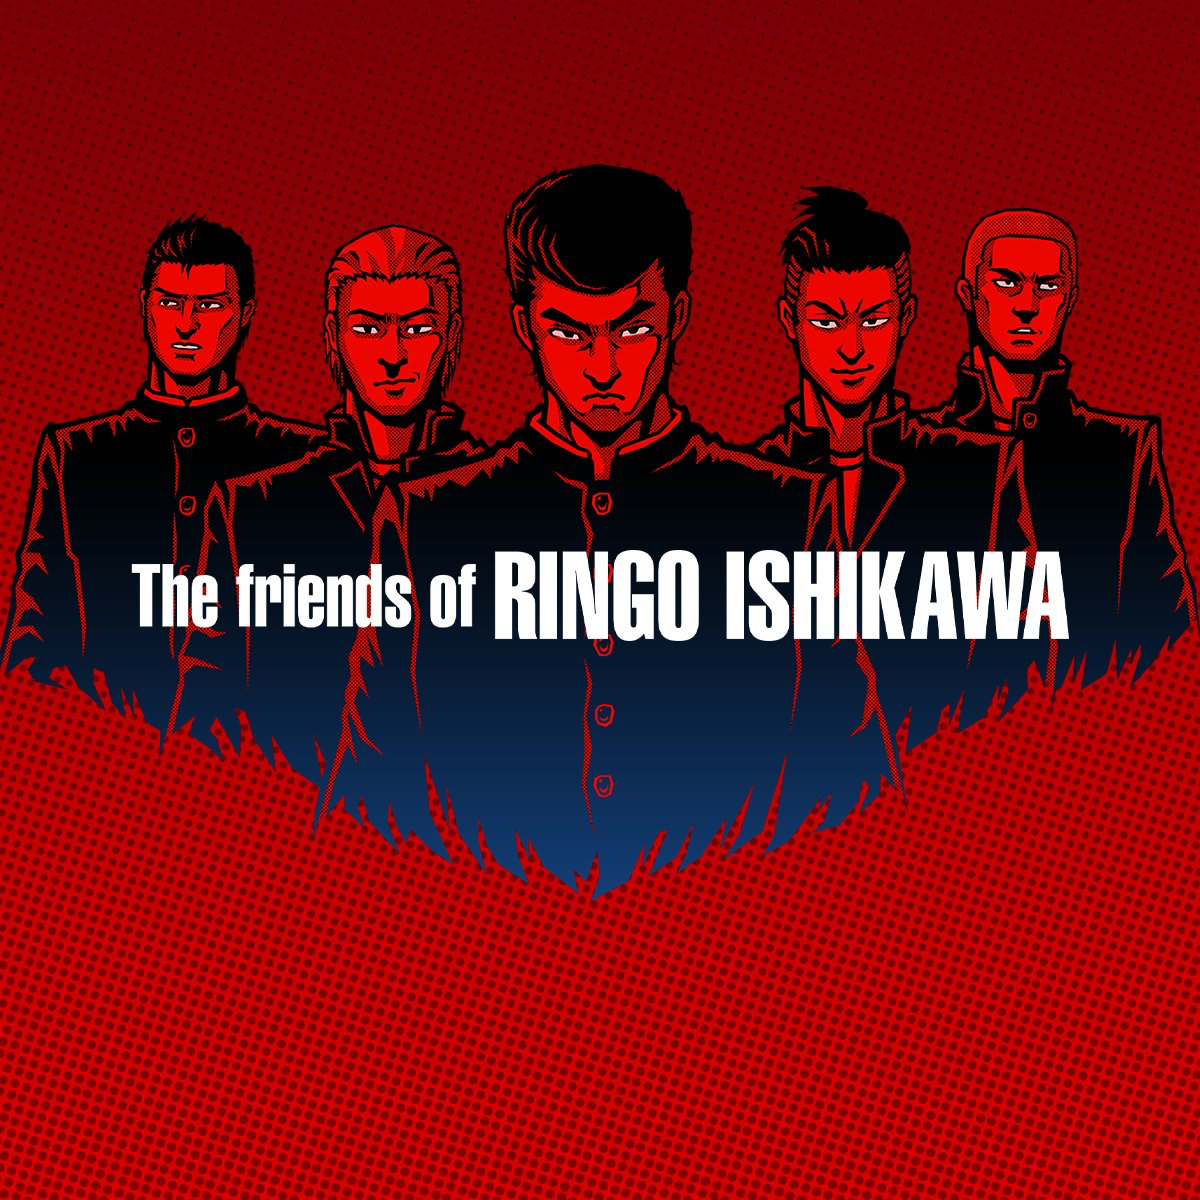 The friends of ringo. Ringo Ishikawa. The friends of Ringo Ishikawa. The friends of Ringo Ishikawa постеры. The friends of Ringo Ishikawa карта.